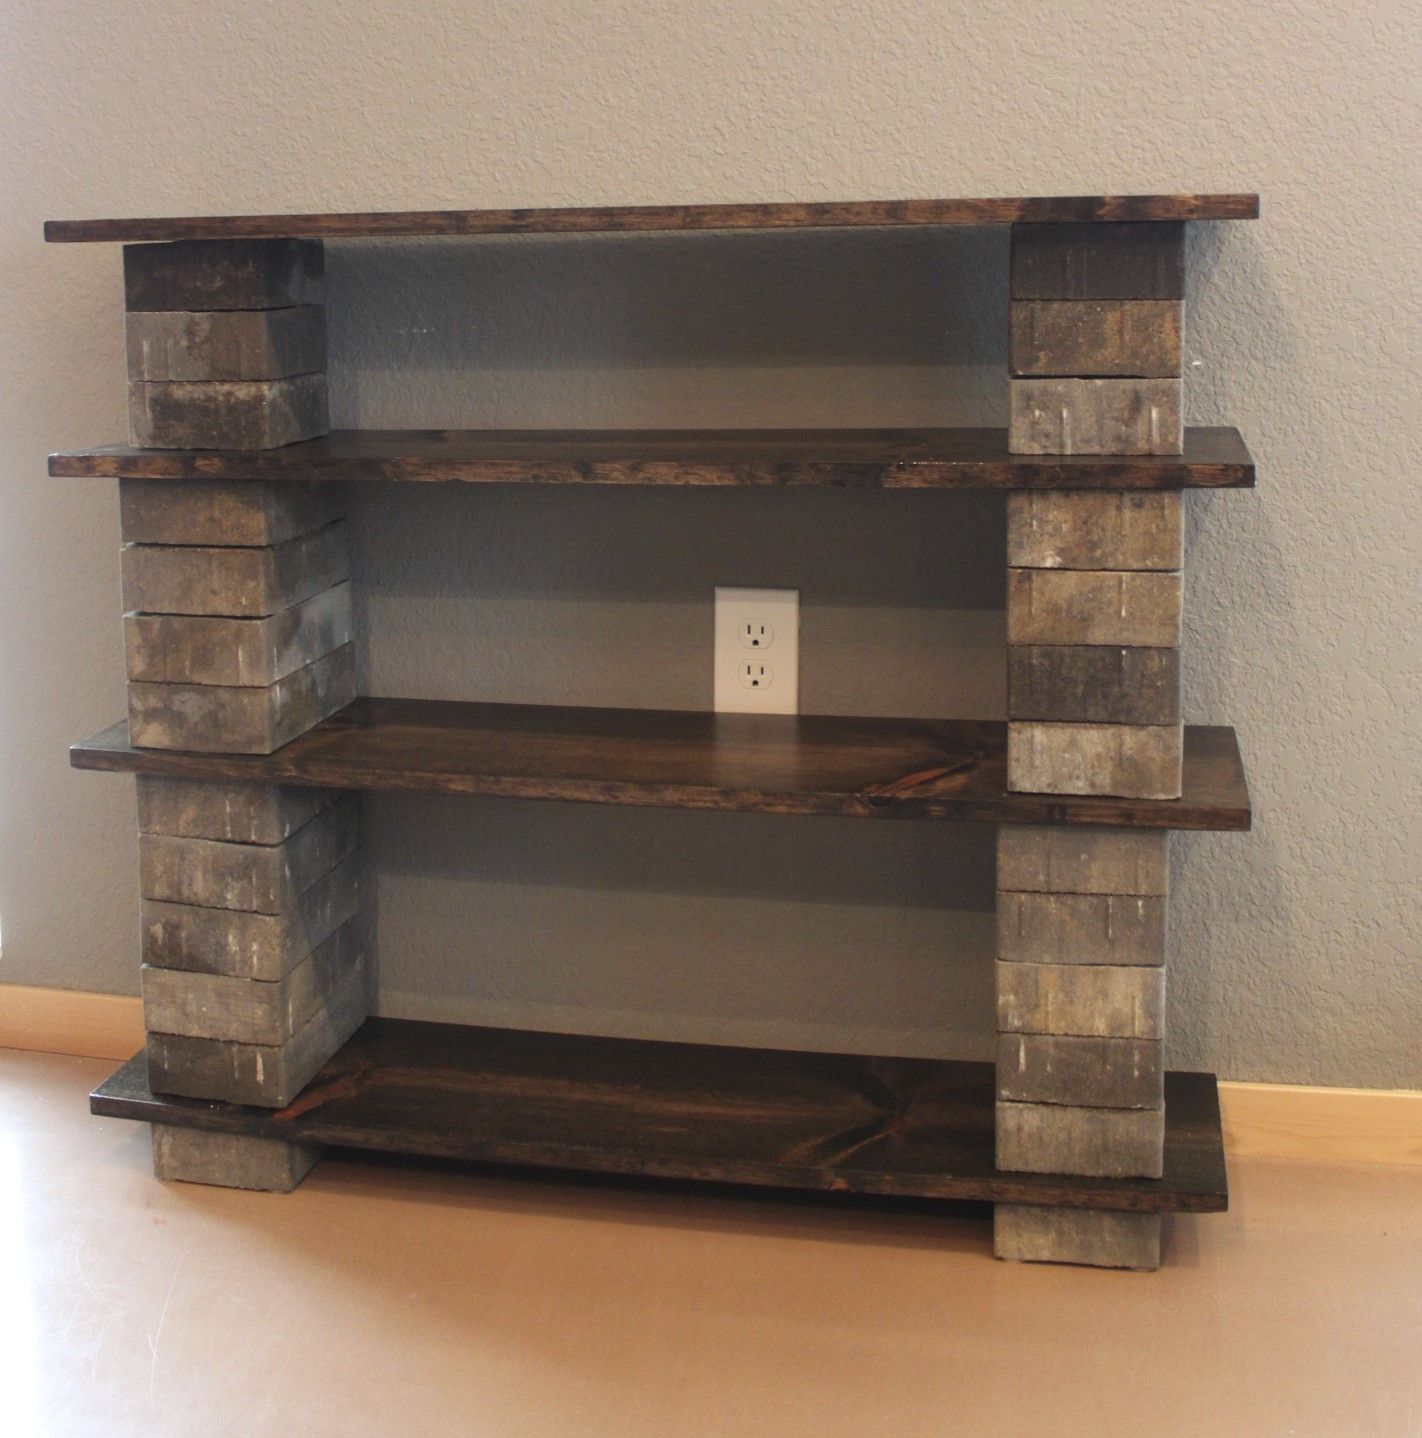 cheapest, easiest DIY bookshelf ever — concrete blocks (decorative pavers in yo